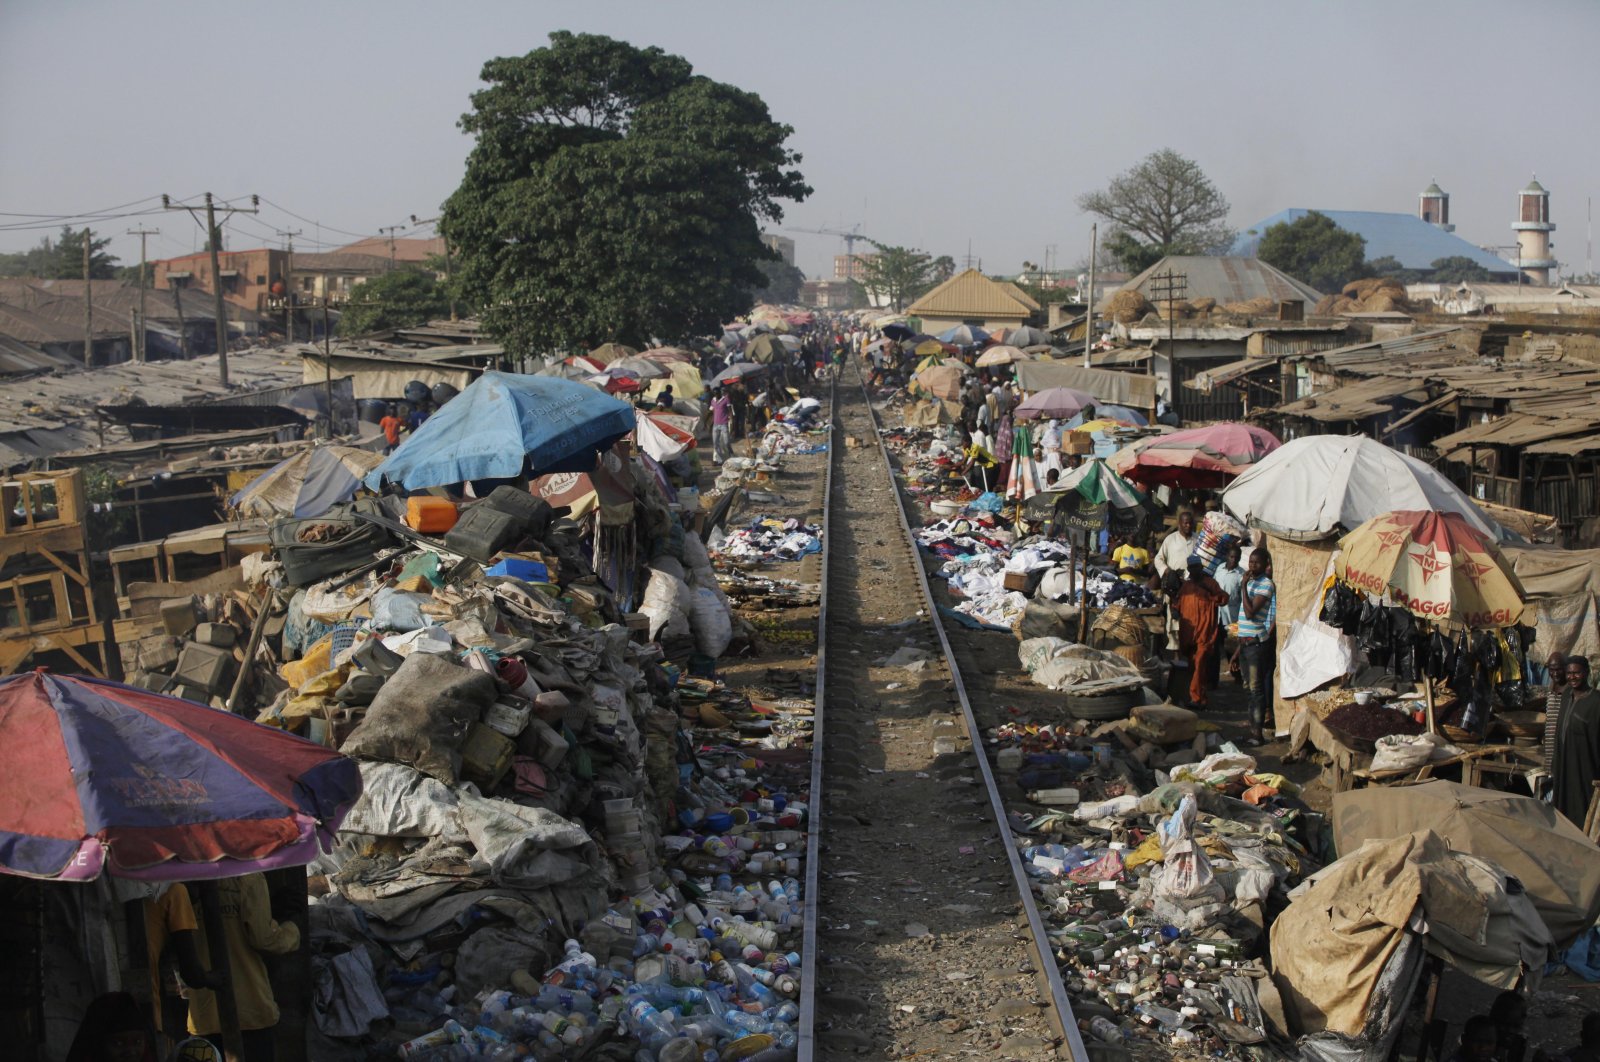 The Lagos to Kano rail track passes through a central market in Kaduna, Nigeria, March 9, 2013. (AP Photo)